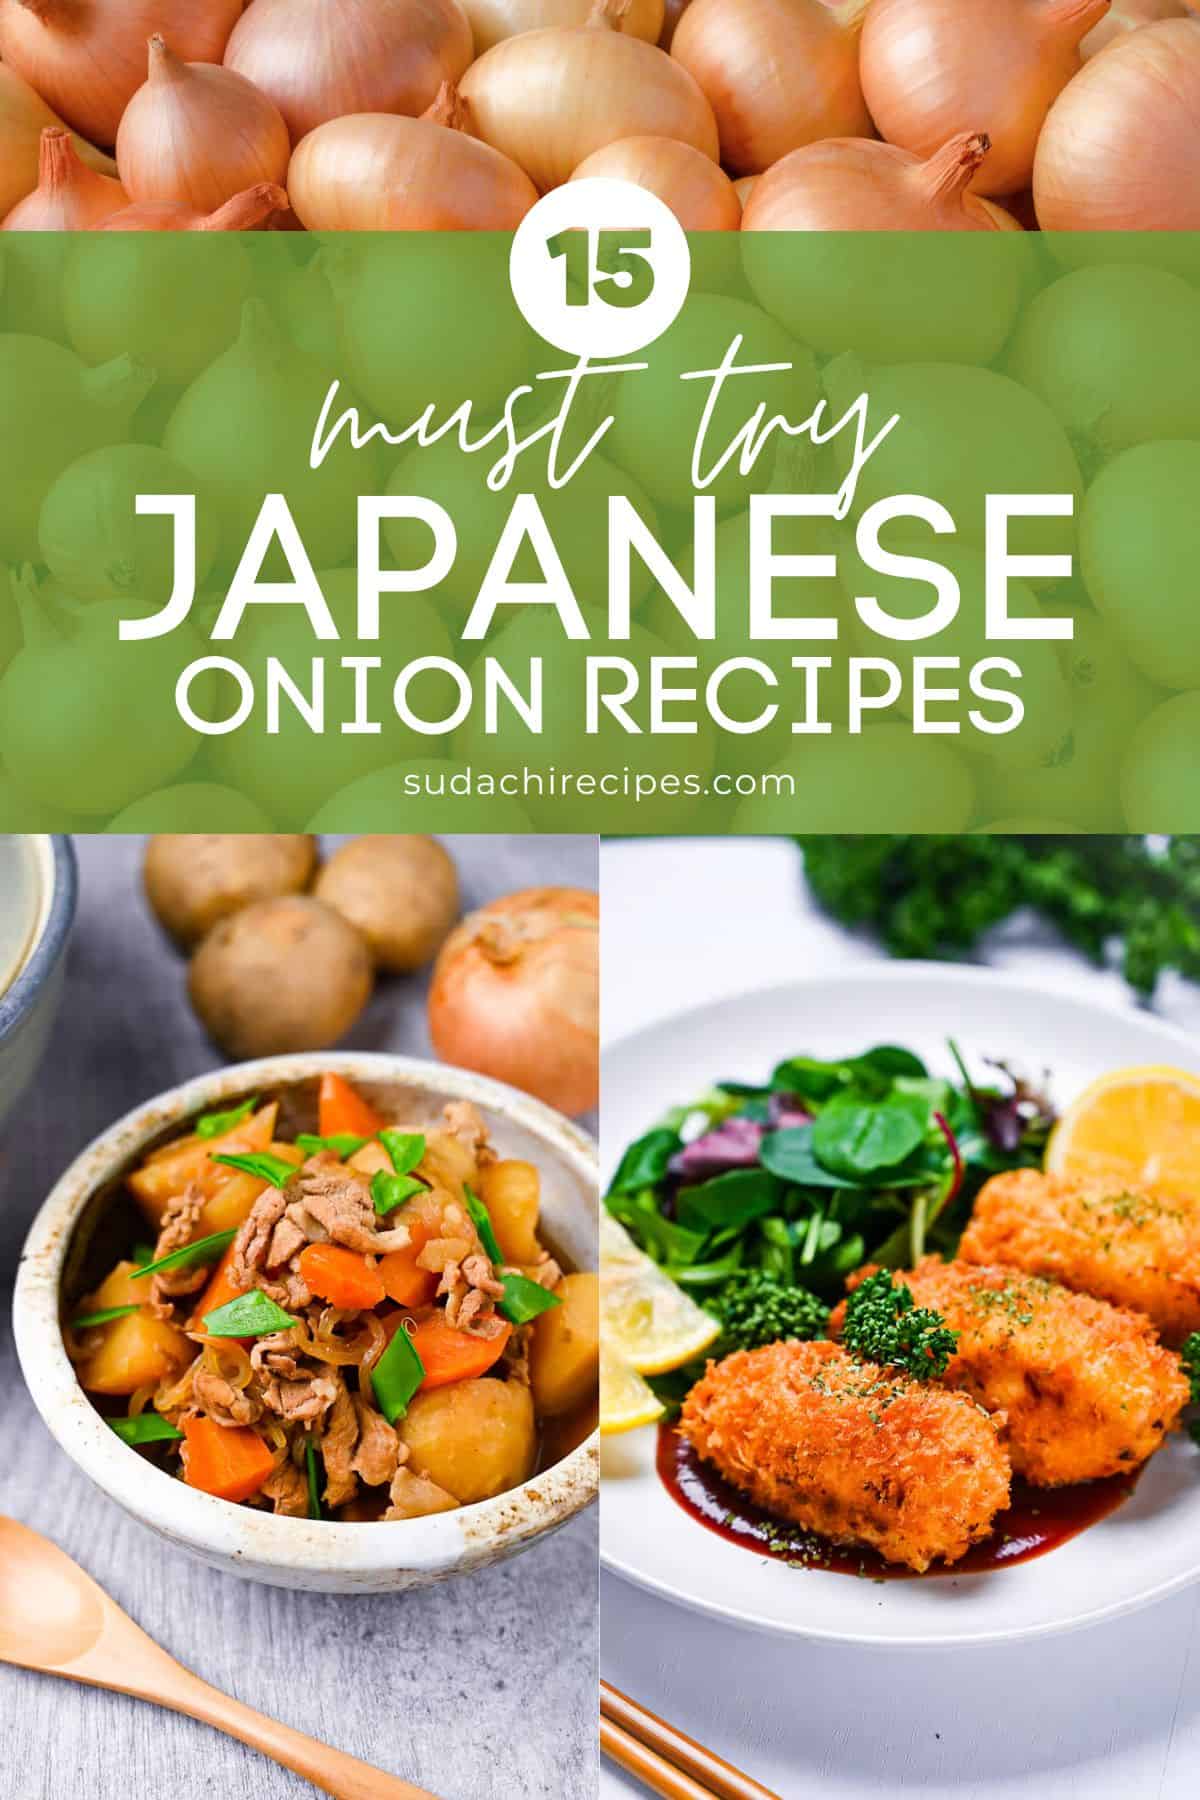 Japanese onion recipes